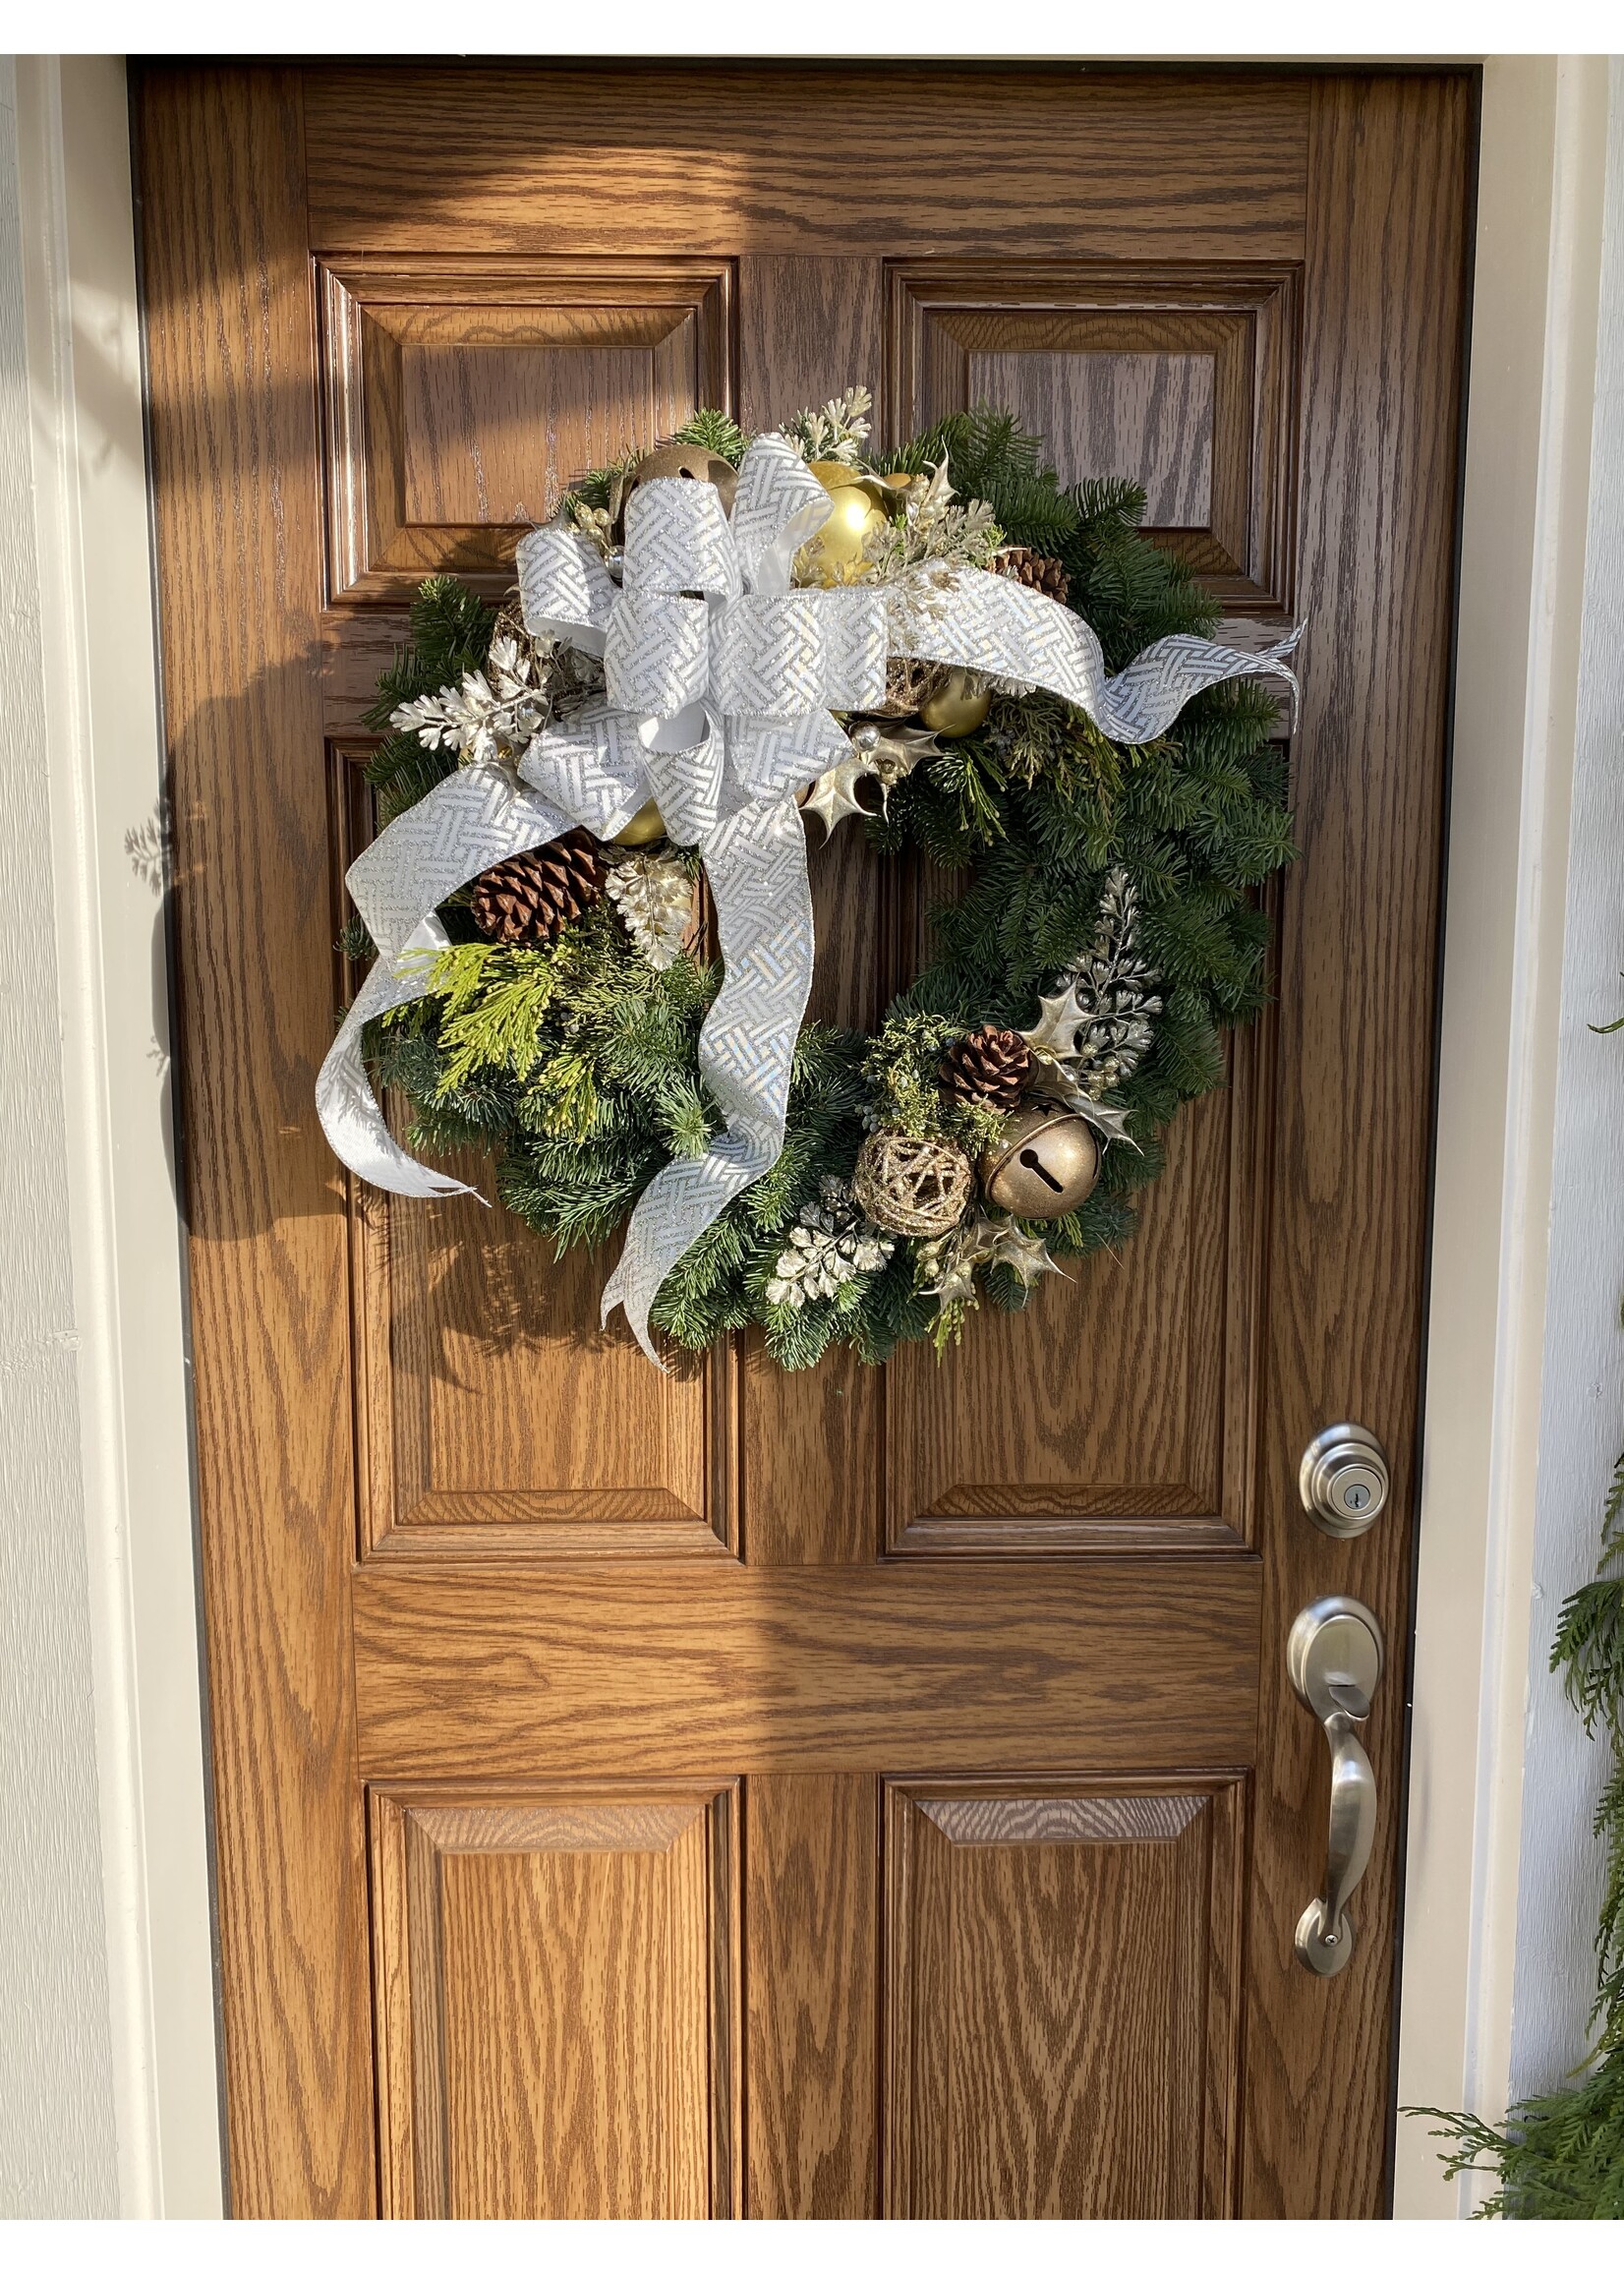 December 3rd, Wreath Decorating